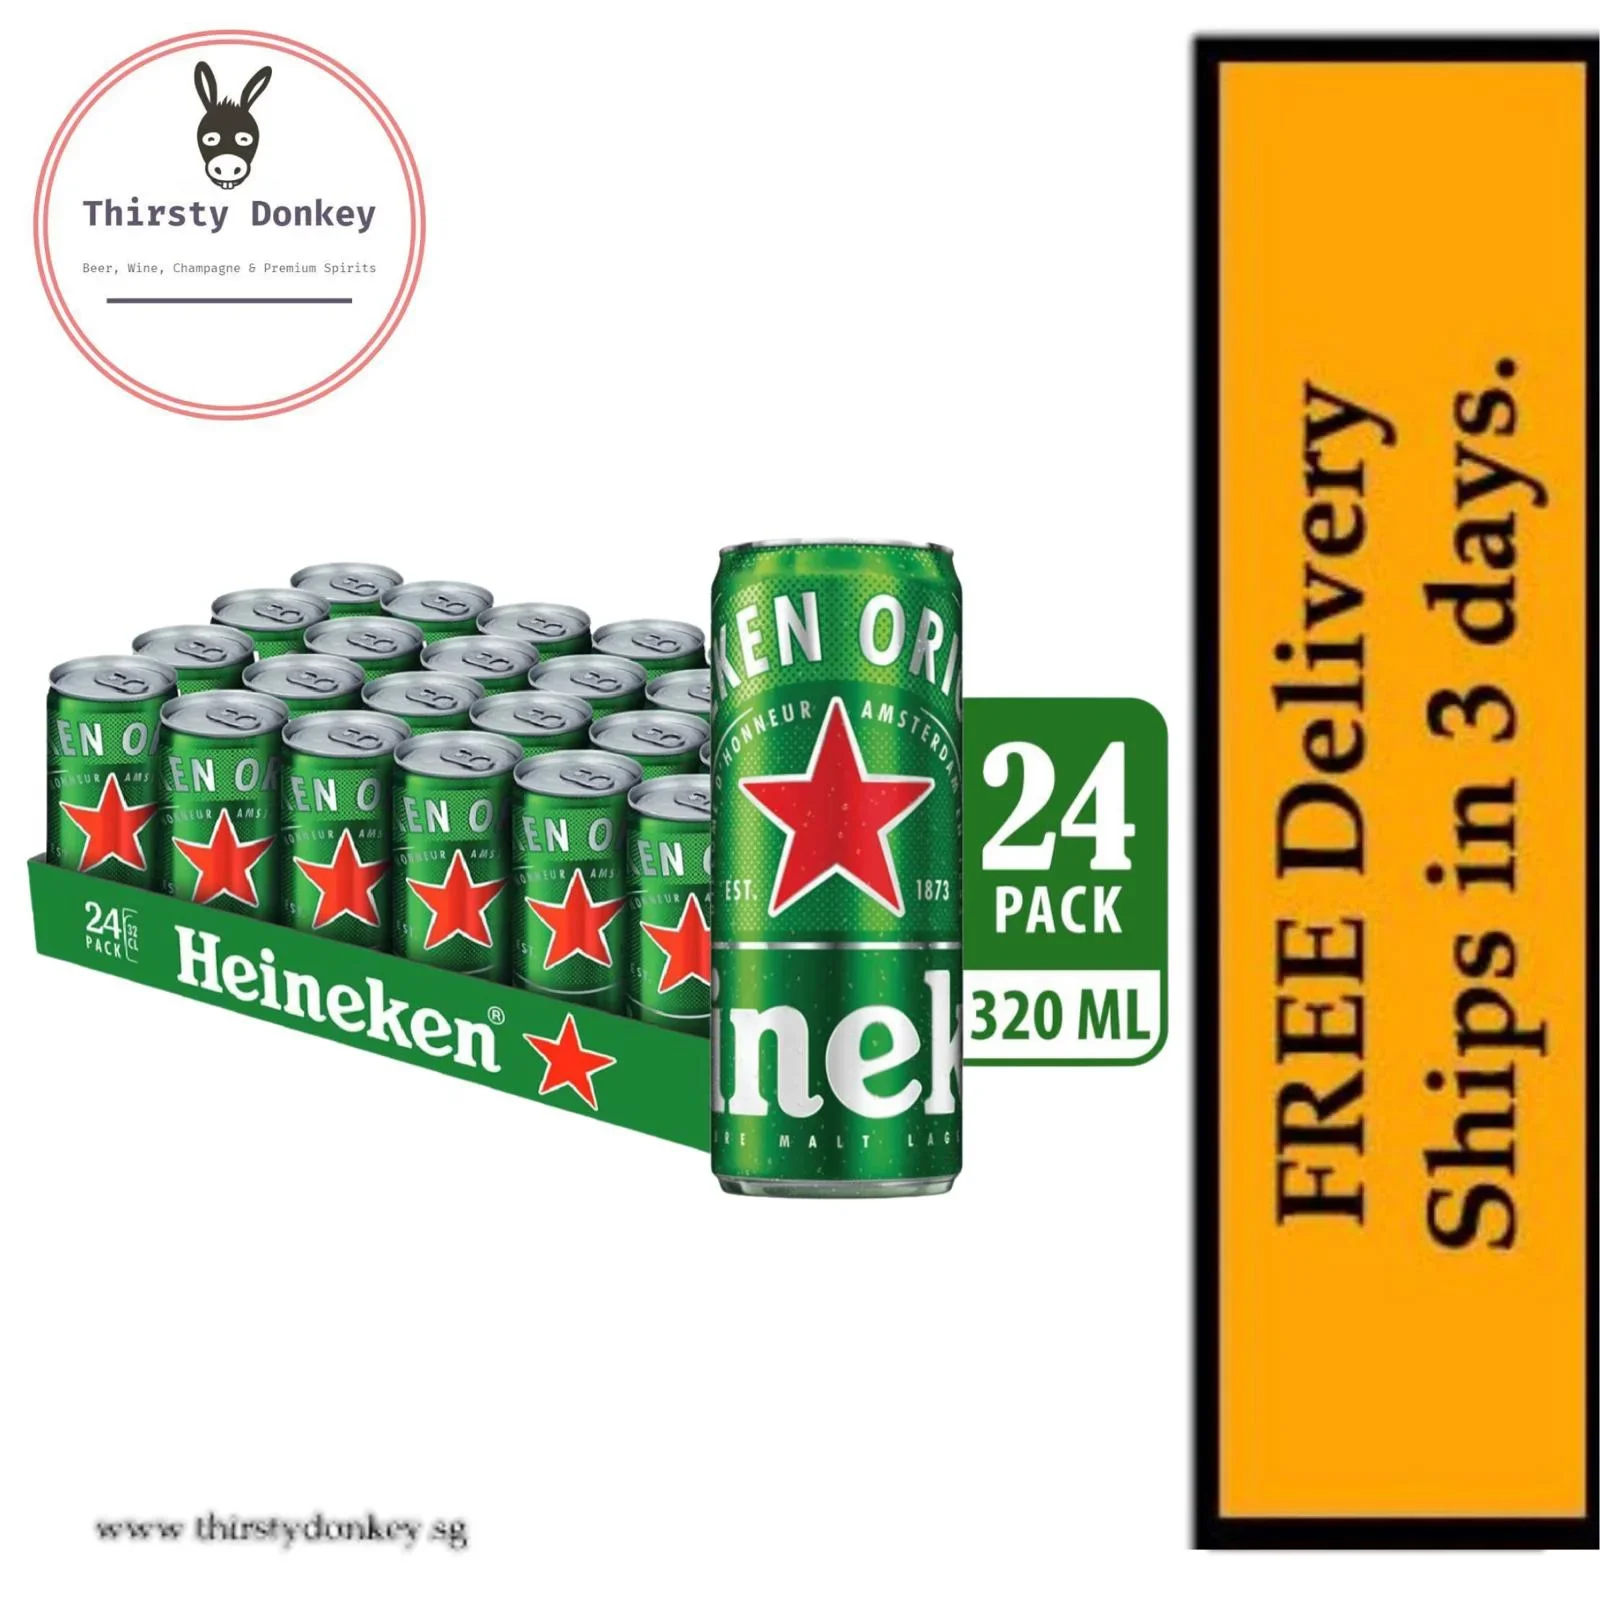 Heineken Lager Beer (24 cans x 320ml) (local stocks)